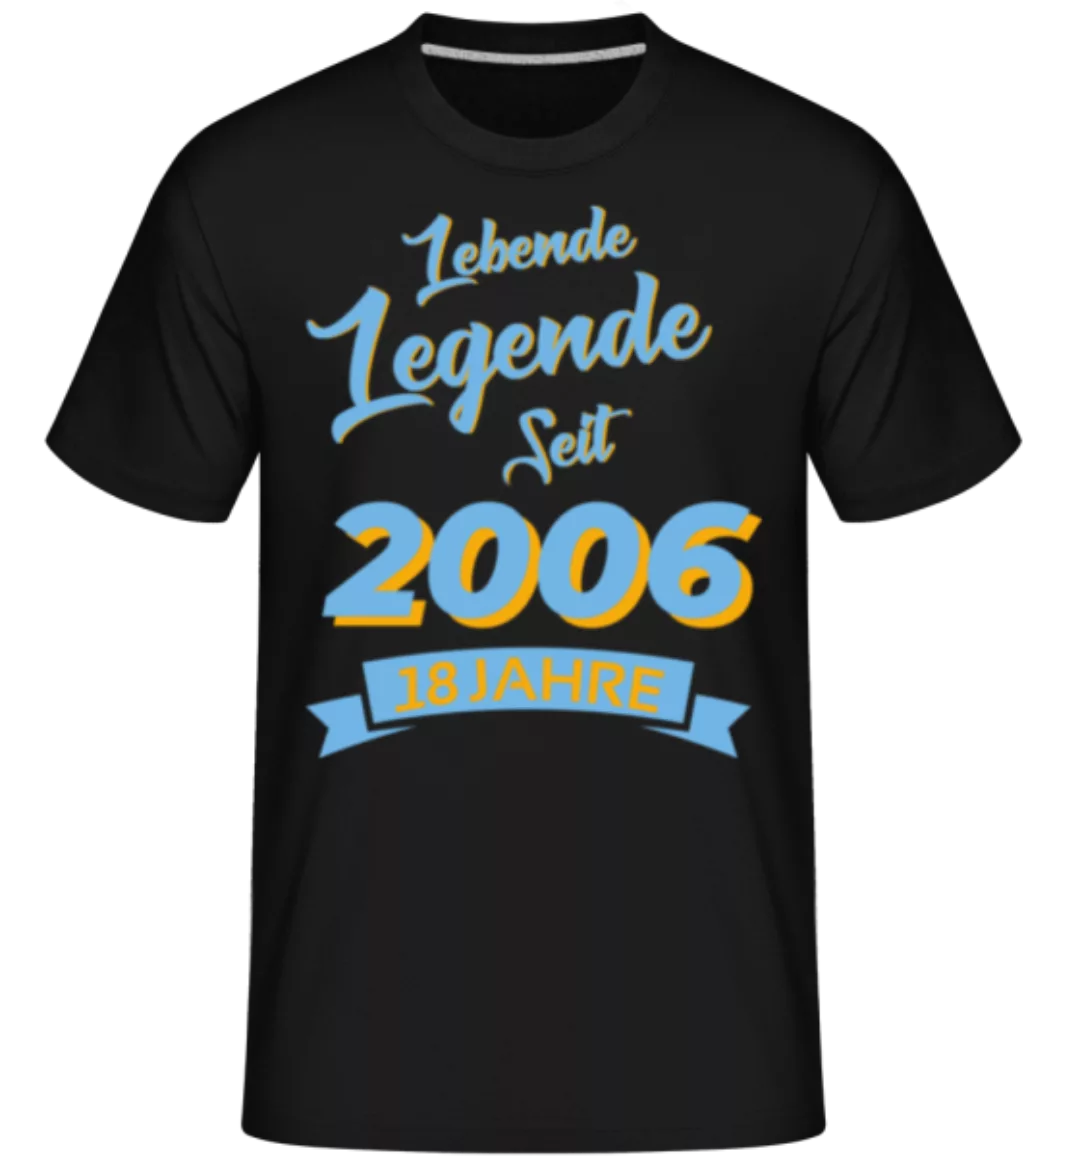 18 Lebende Legende 2006 · Shirtinator Männer T-Shirt günstig online kaufen